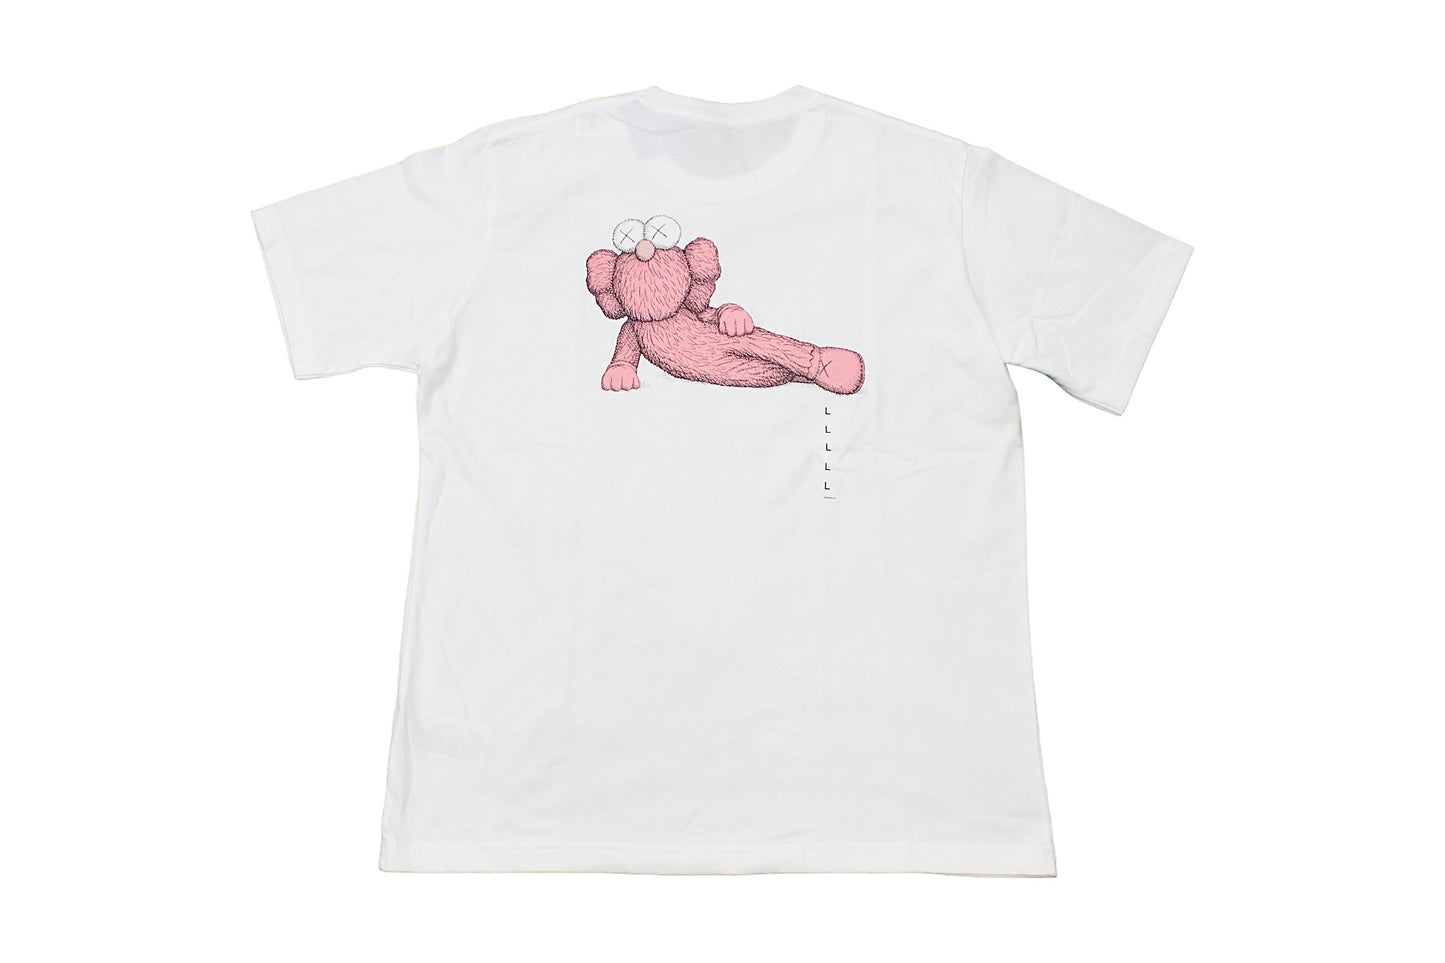 Uniqlo Kaws Pink Figure White T-Shirt